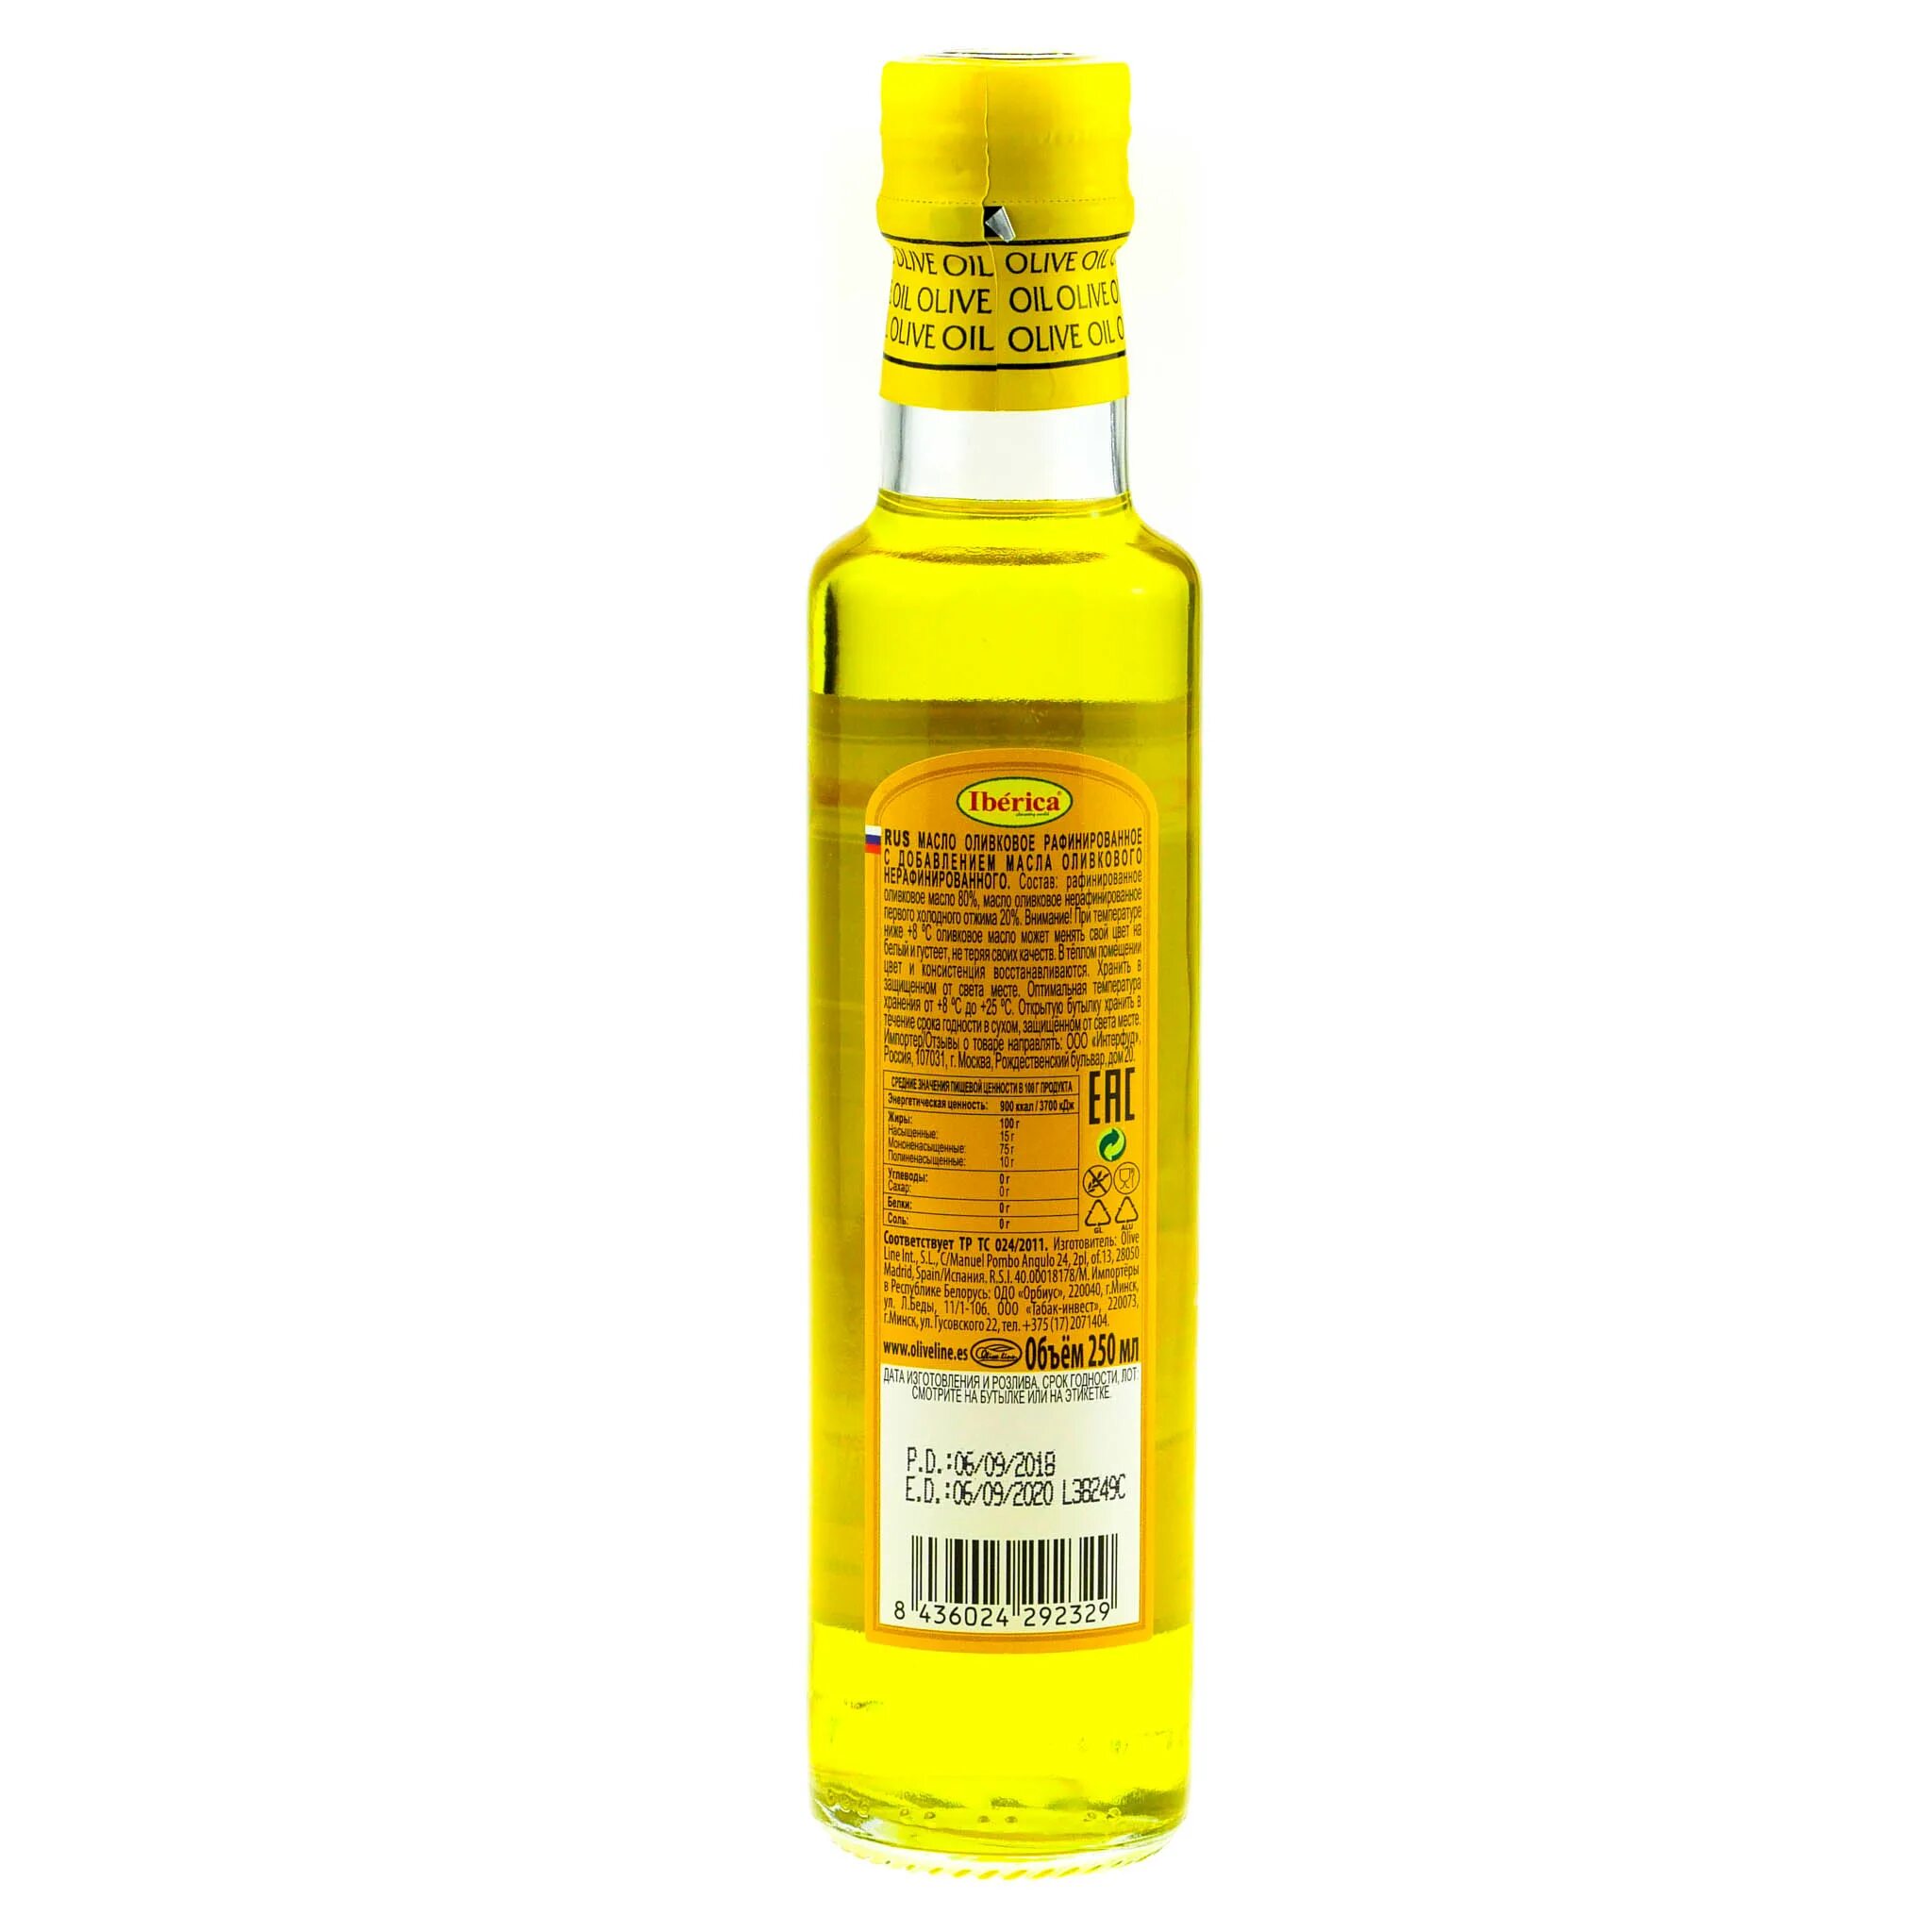 Иберика оливковое масло 250 ml. Масло оливковое Iberica 250 мл. Рафинированное оливковое масло Иберика. Iberica масло оливковое рафинированное.